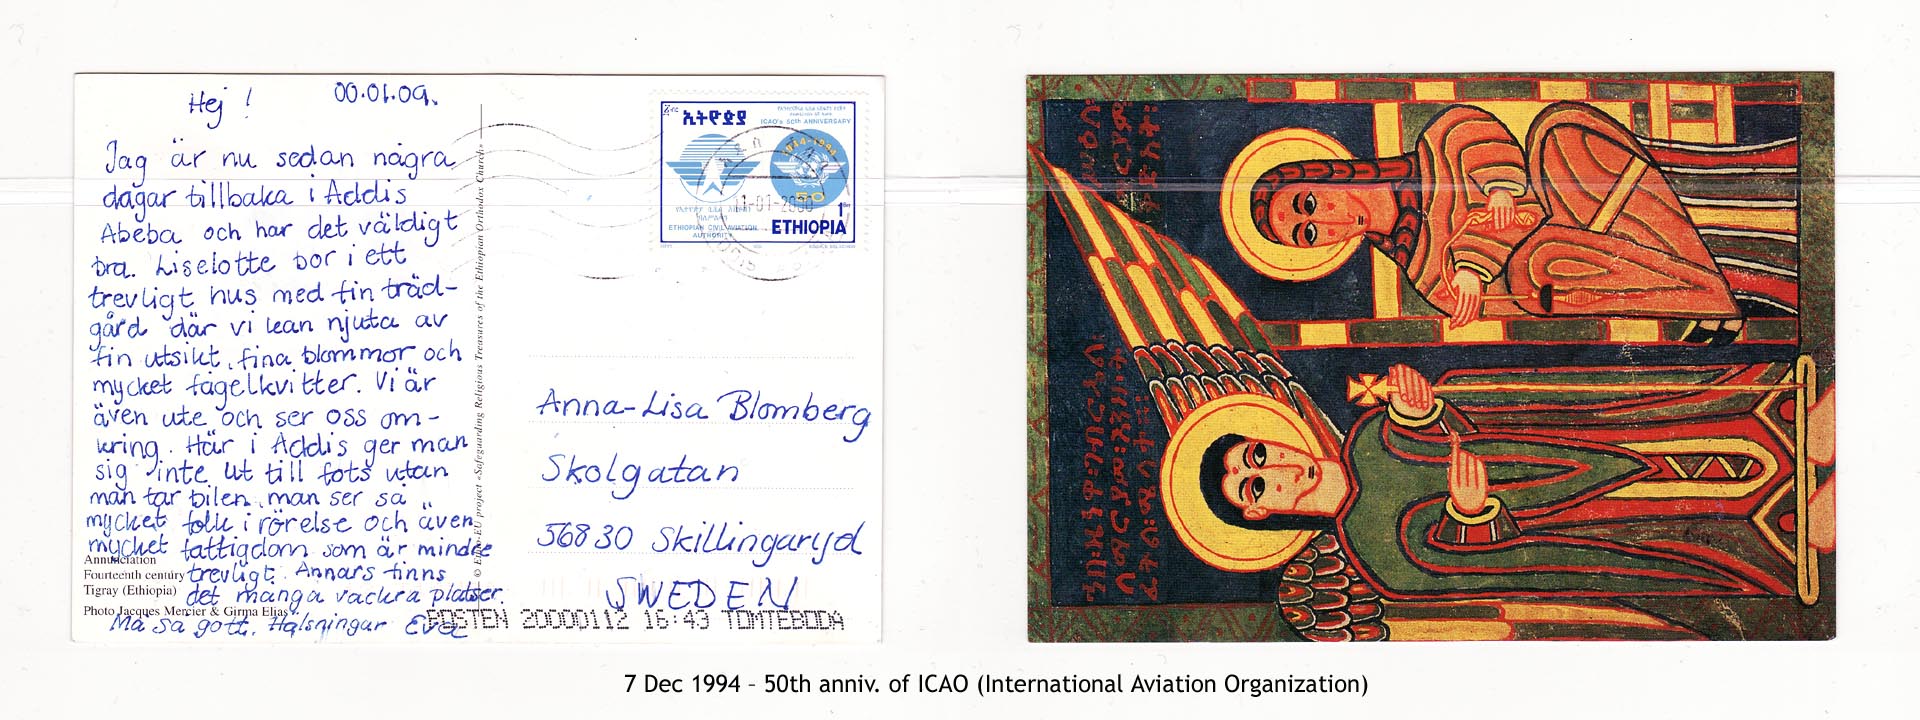 19941207 – 50th anniv. of ICAO (International Aviation Organization)